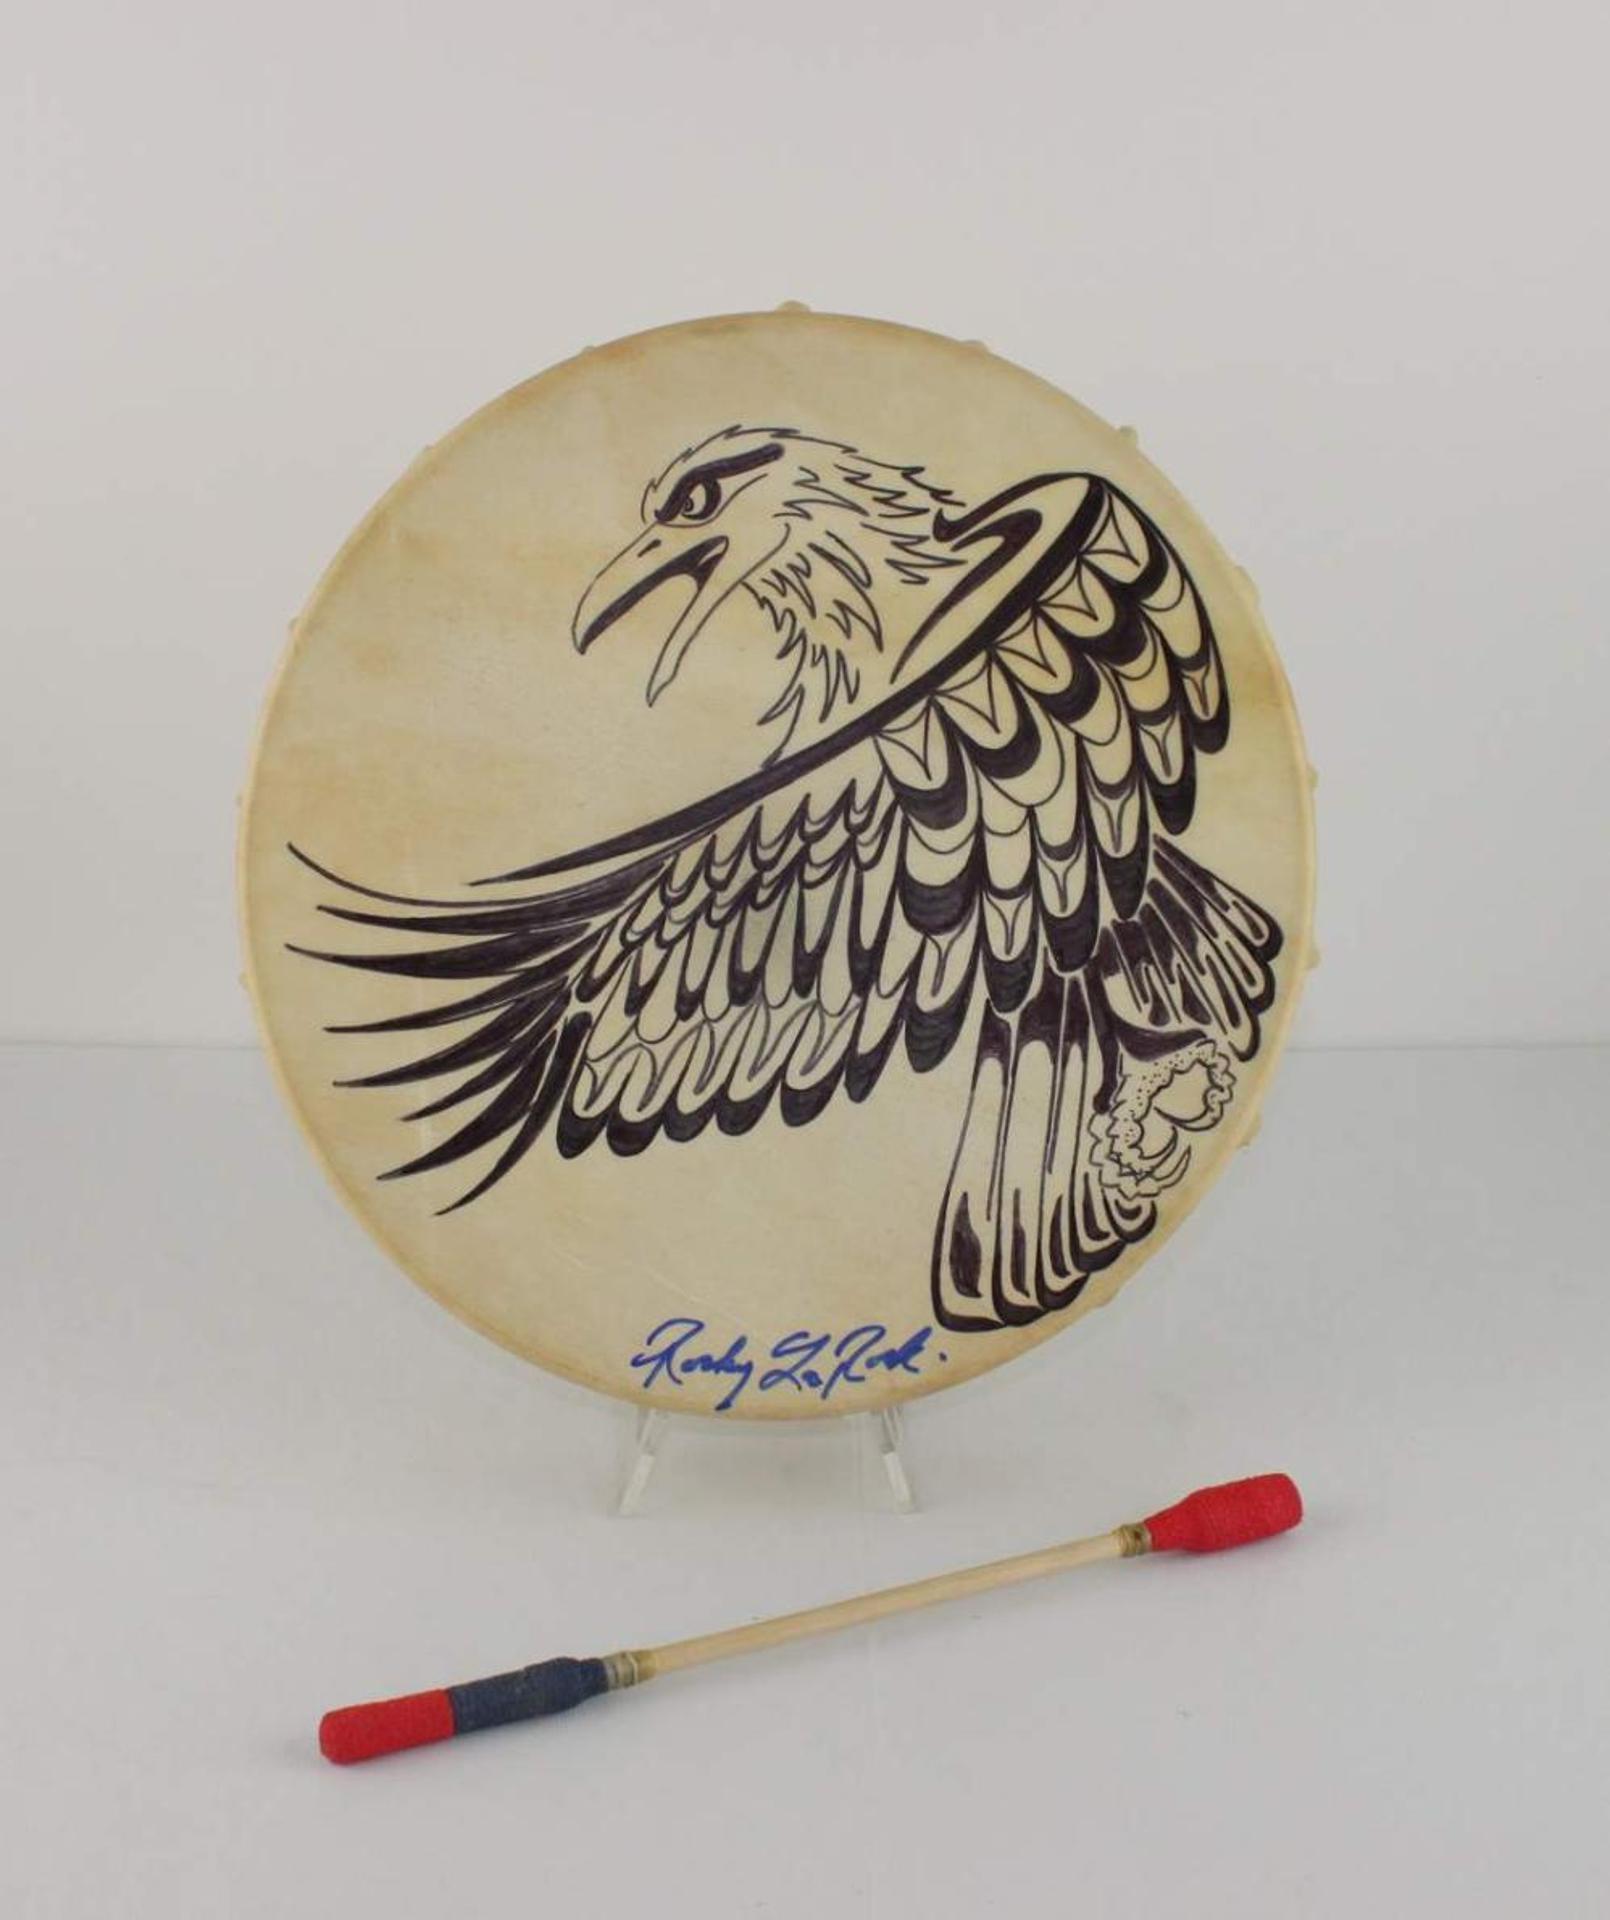 Rocky LaRock - a painted hide drum